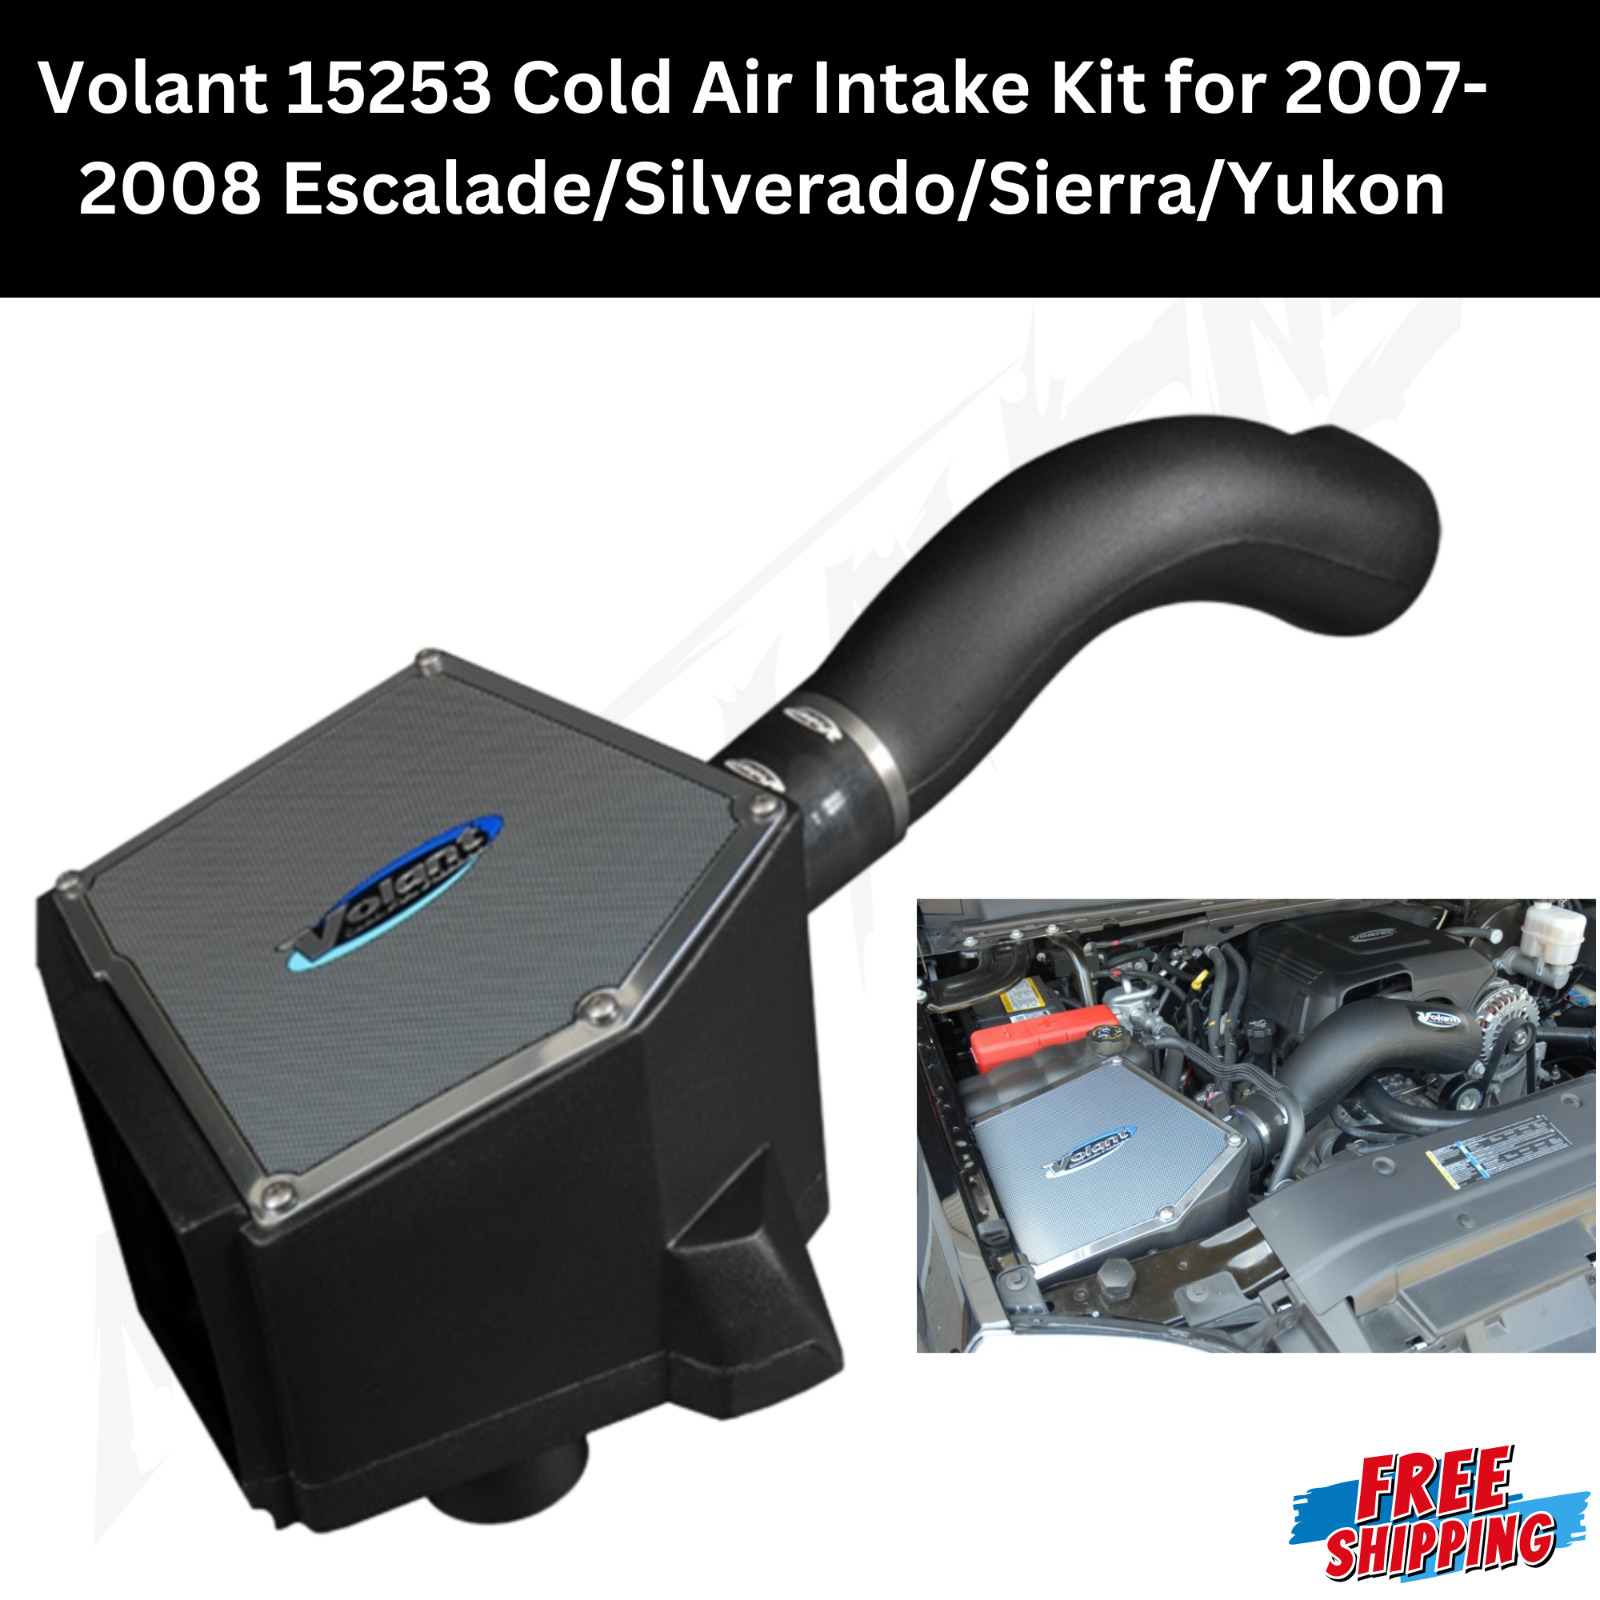 Volant 15253 Cold Air Intake Kit for 2007-2008 Escalade/Silverado/Sierra/Yukon